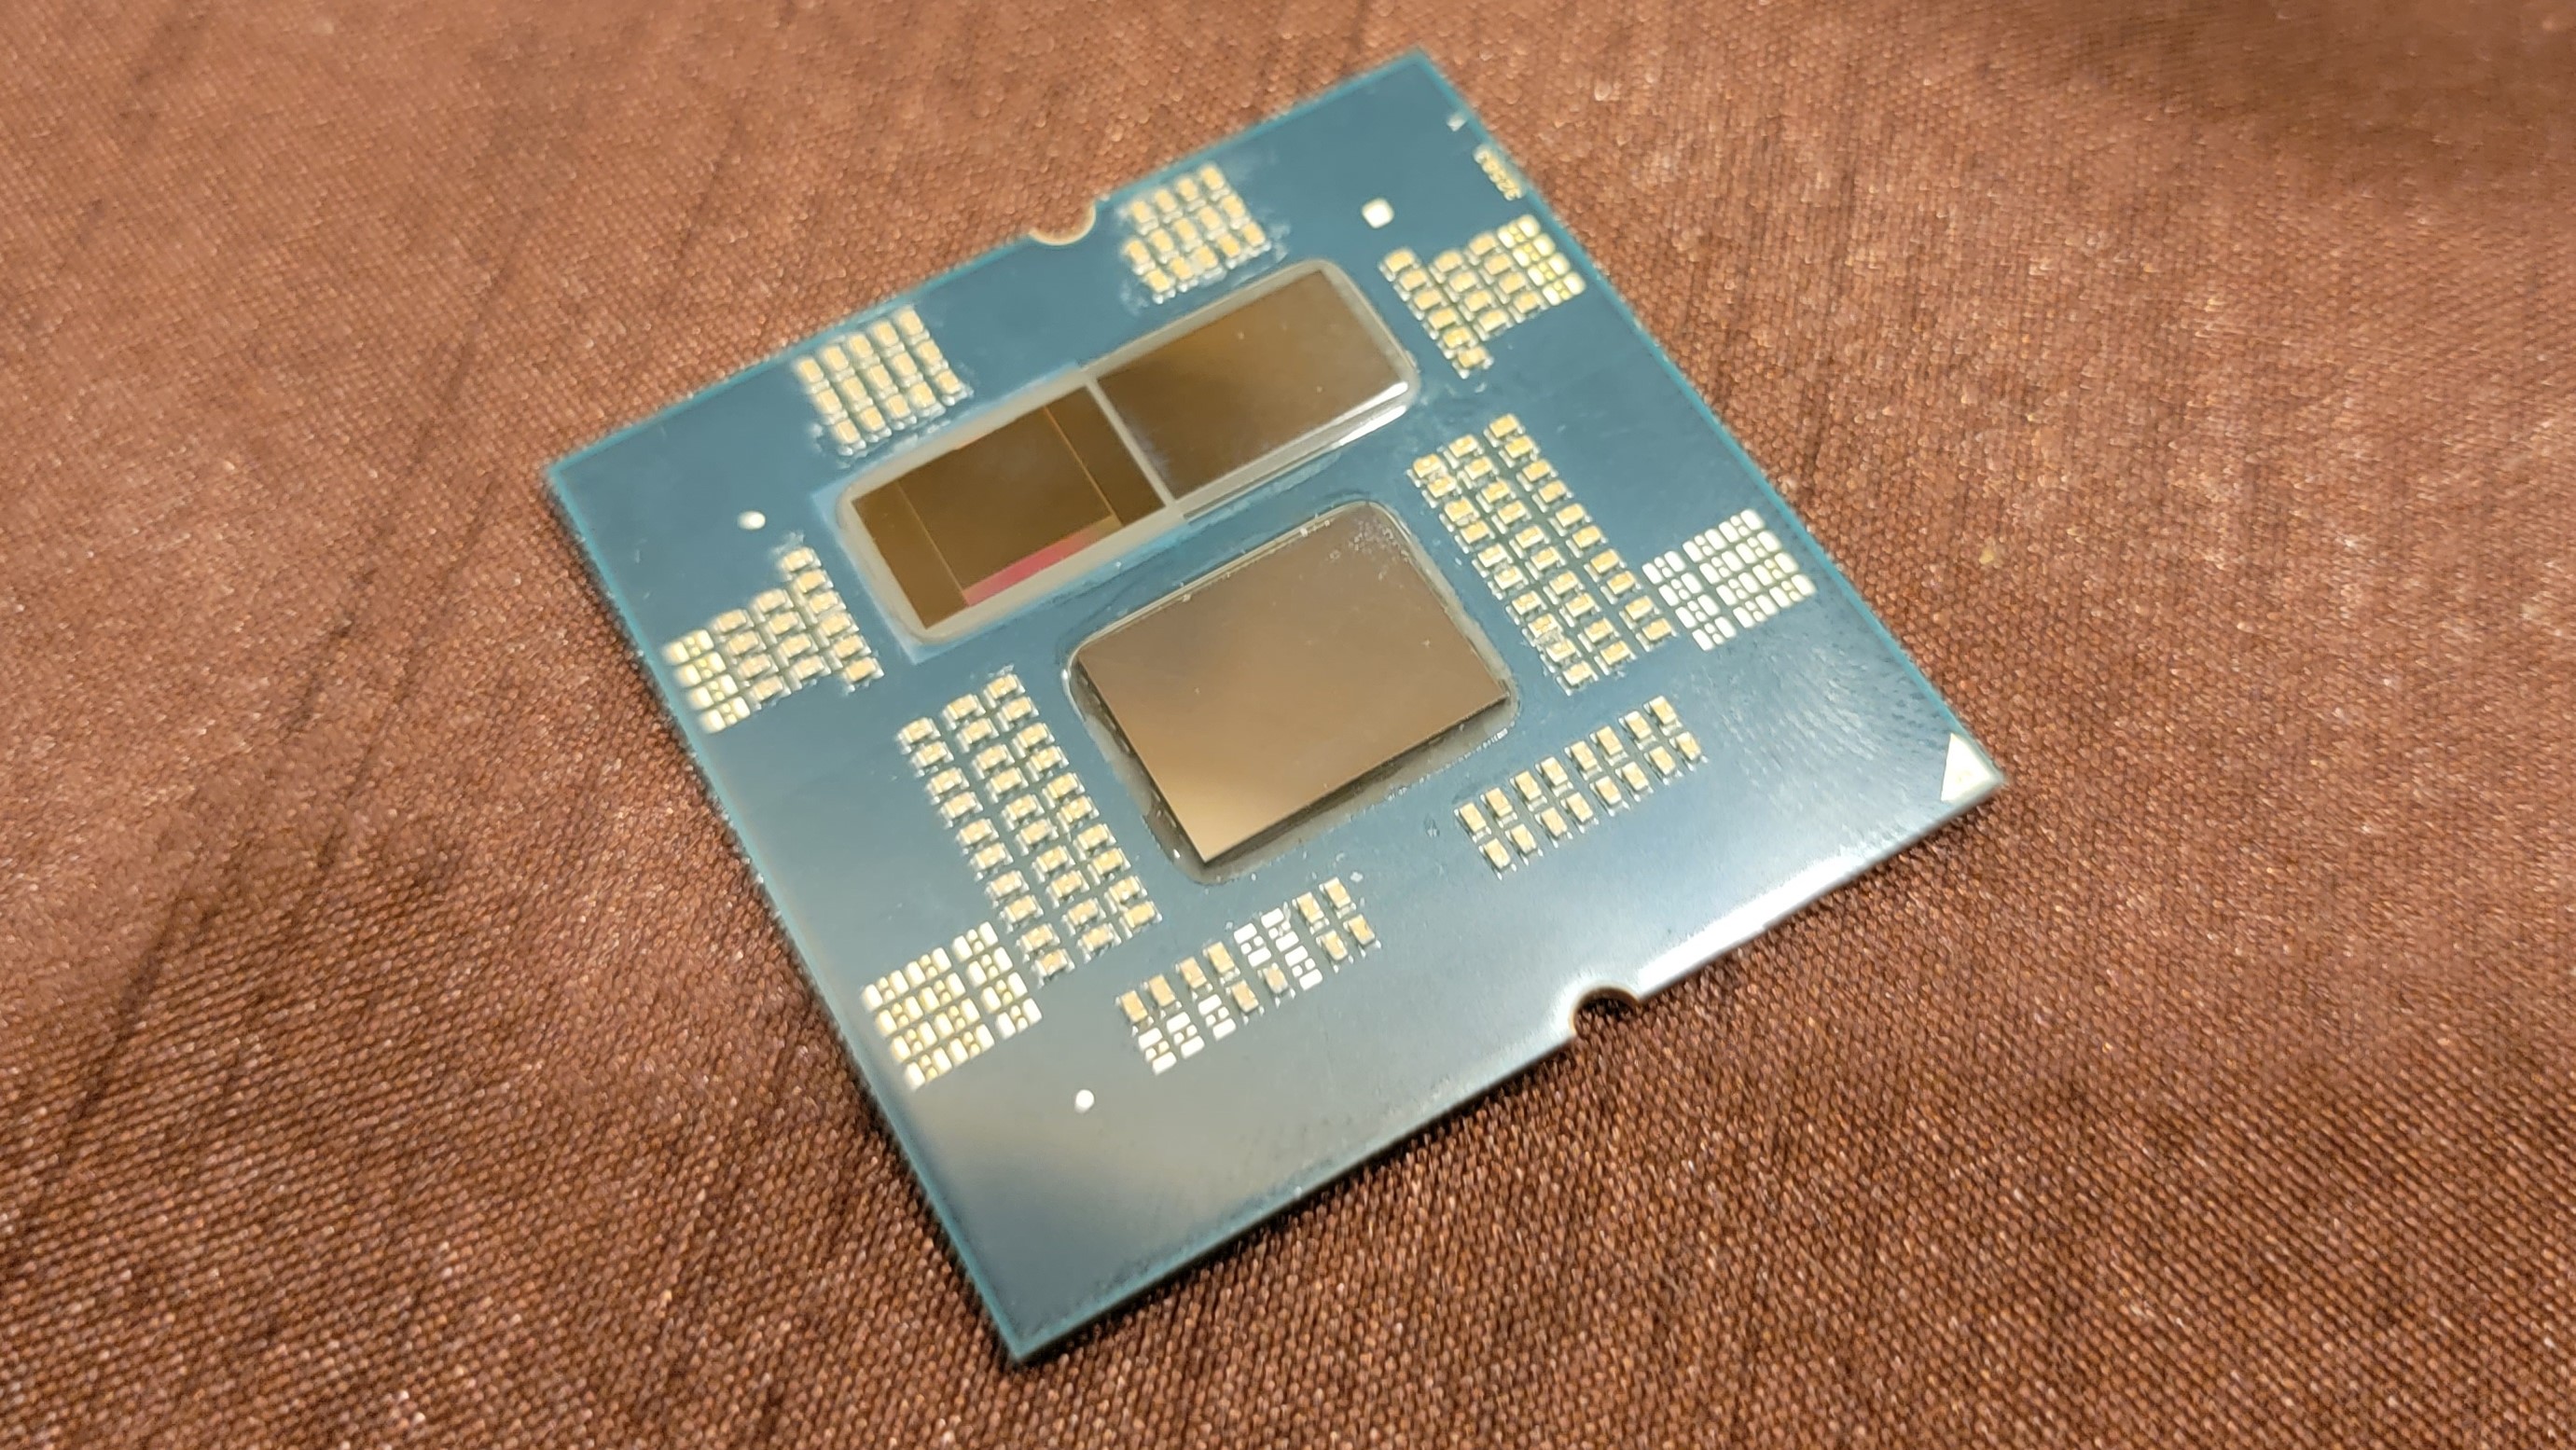 AMD's new Ryzen X3D chips get February launch date